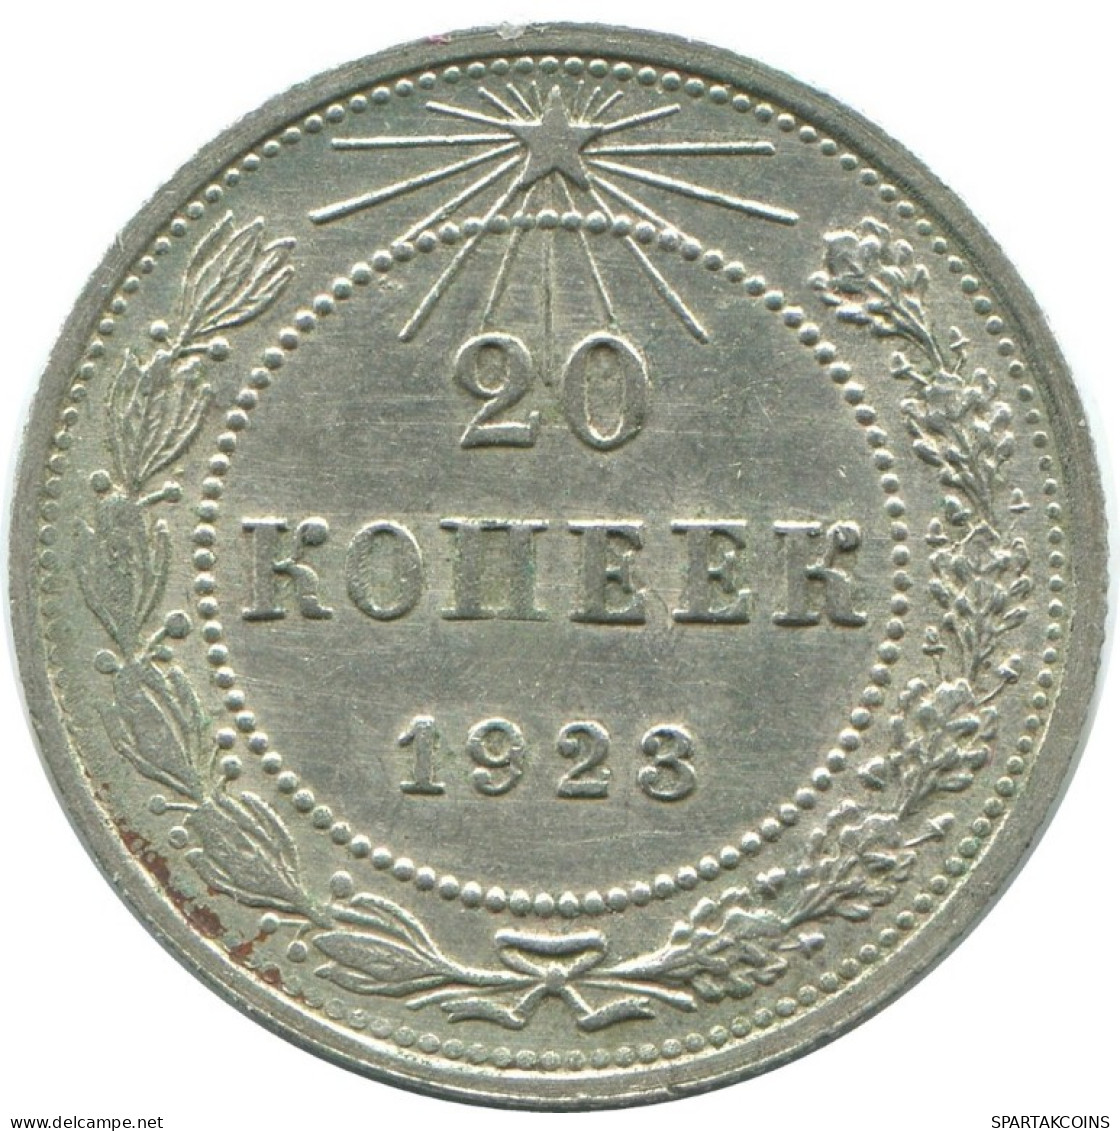 20 KOPEKS 1923 RUSSLAND RUSSIA RSFSR SILBER Münze HIGH GRADE #AF679.D.A - Rusland